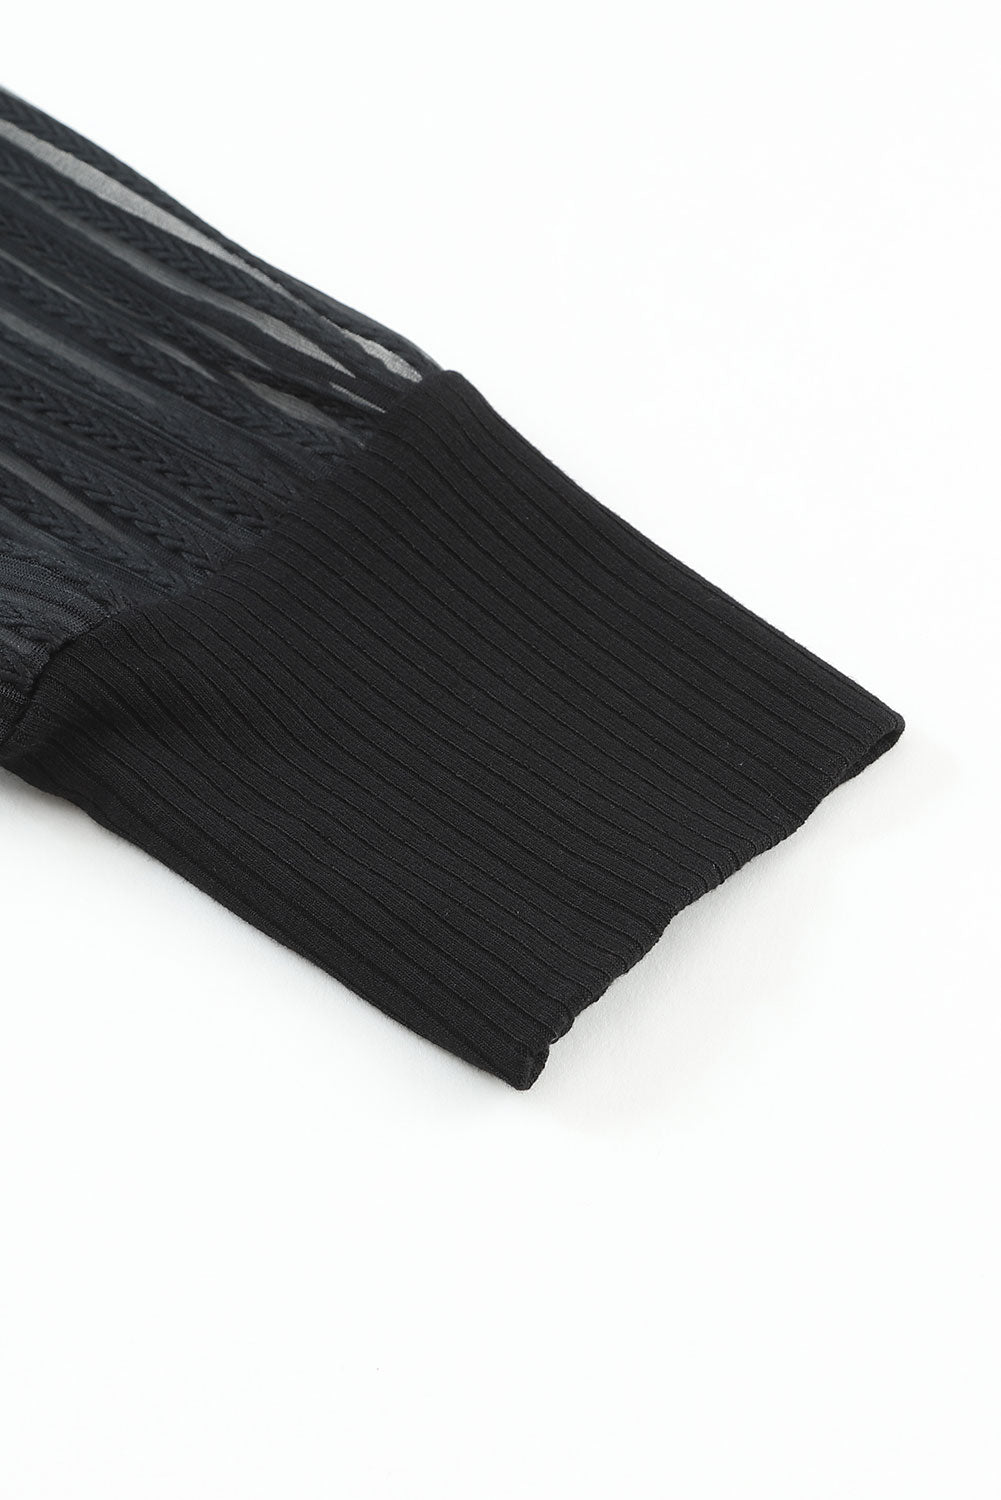 Black Striped Mesh Long Sleeve Crewneck Ribbed Top